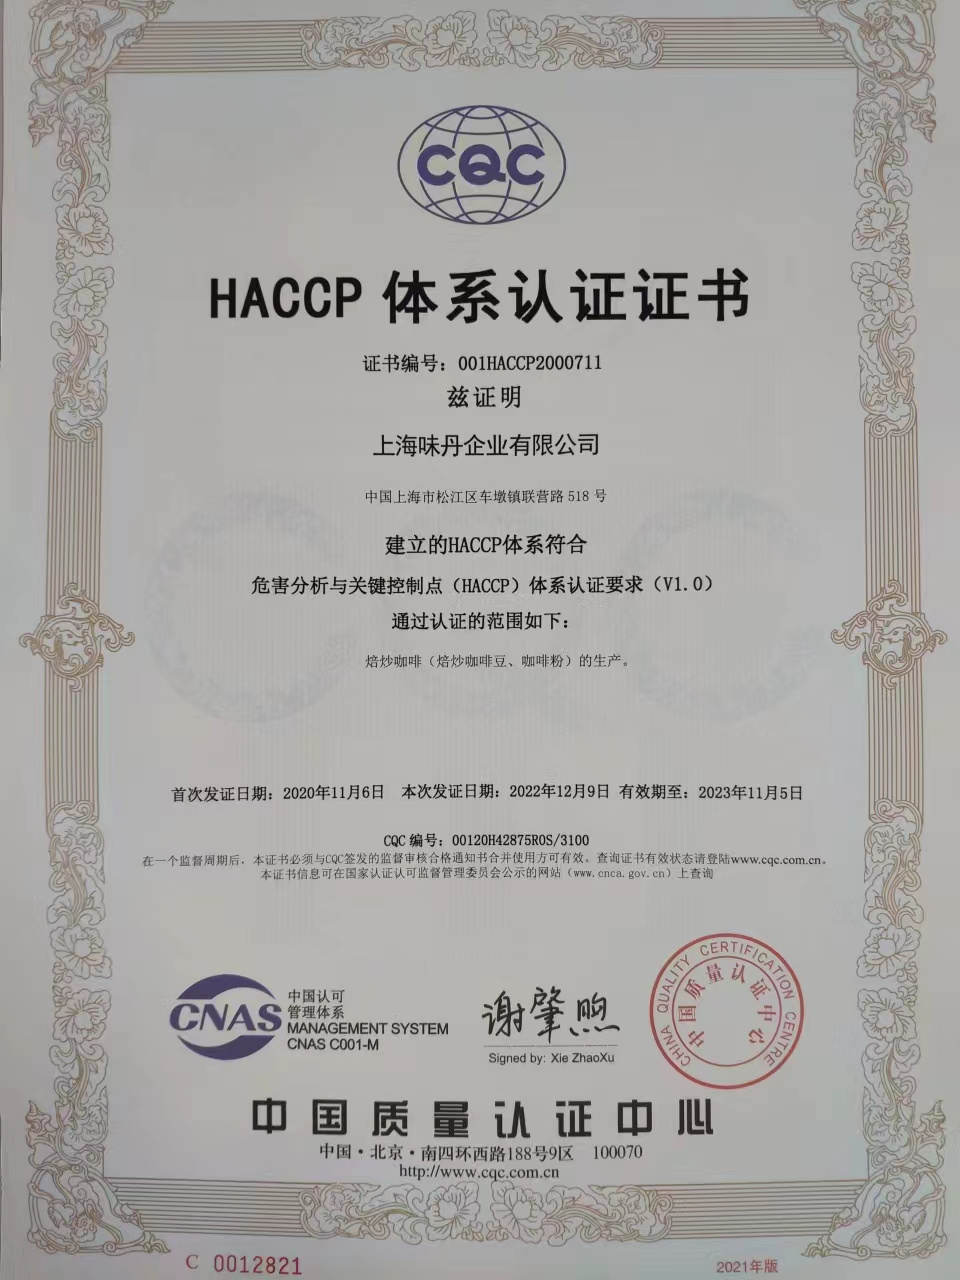 HACPP证书